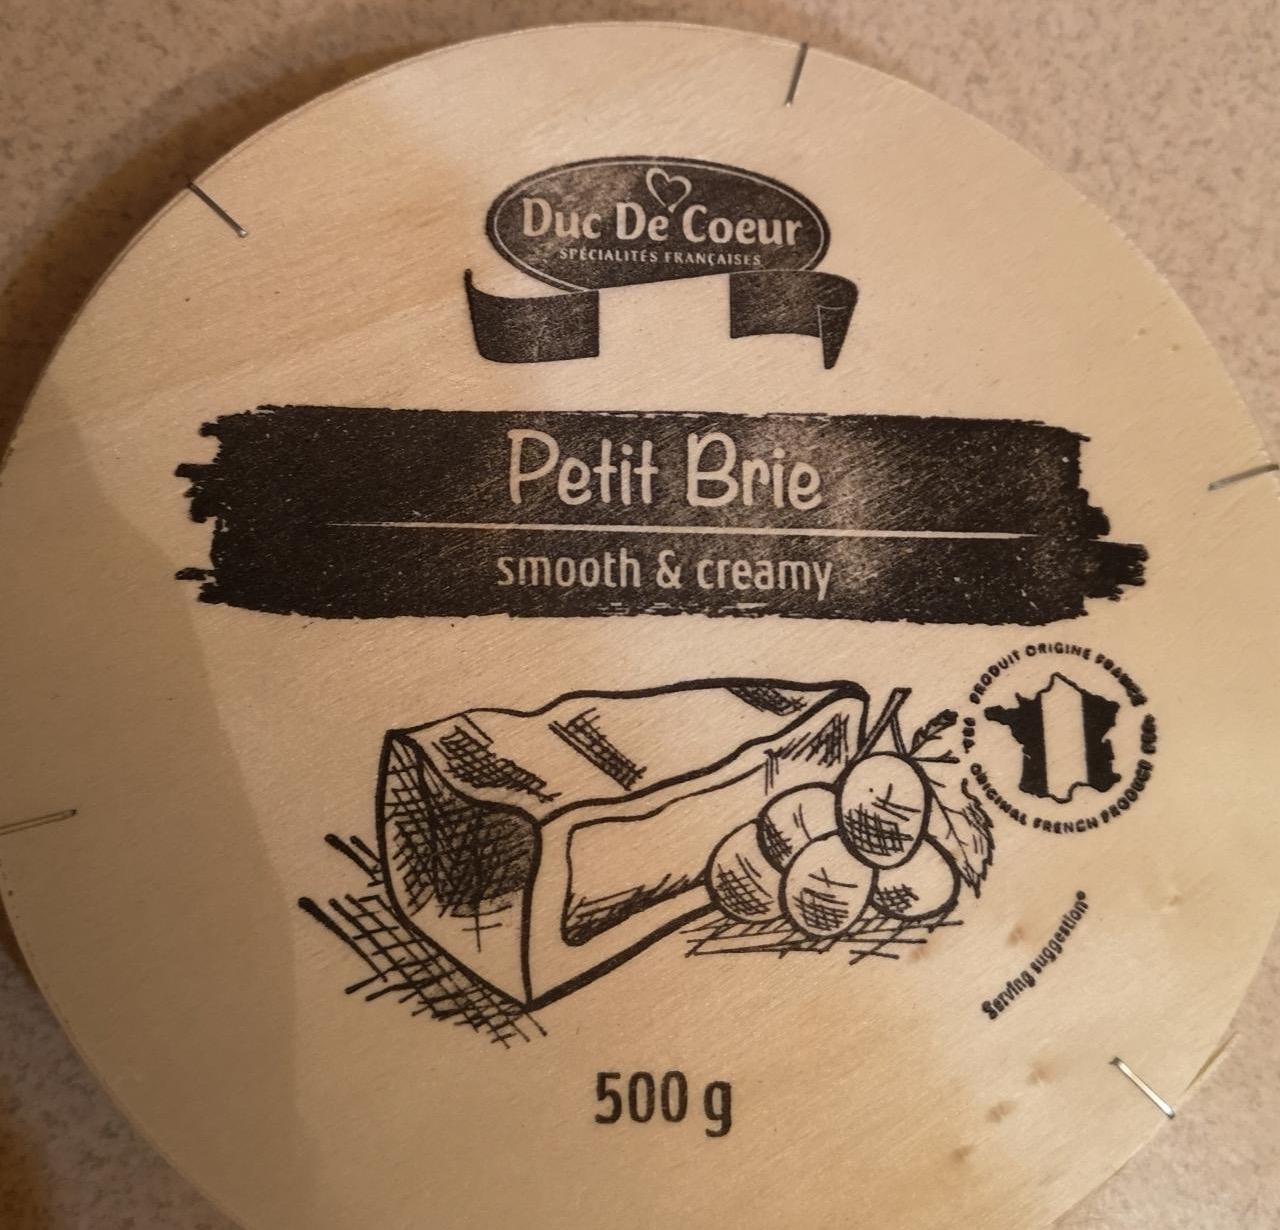 Képek - Petit Brie smooth & creamy Duc De Coeur